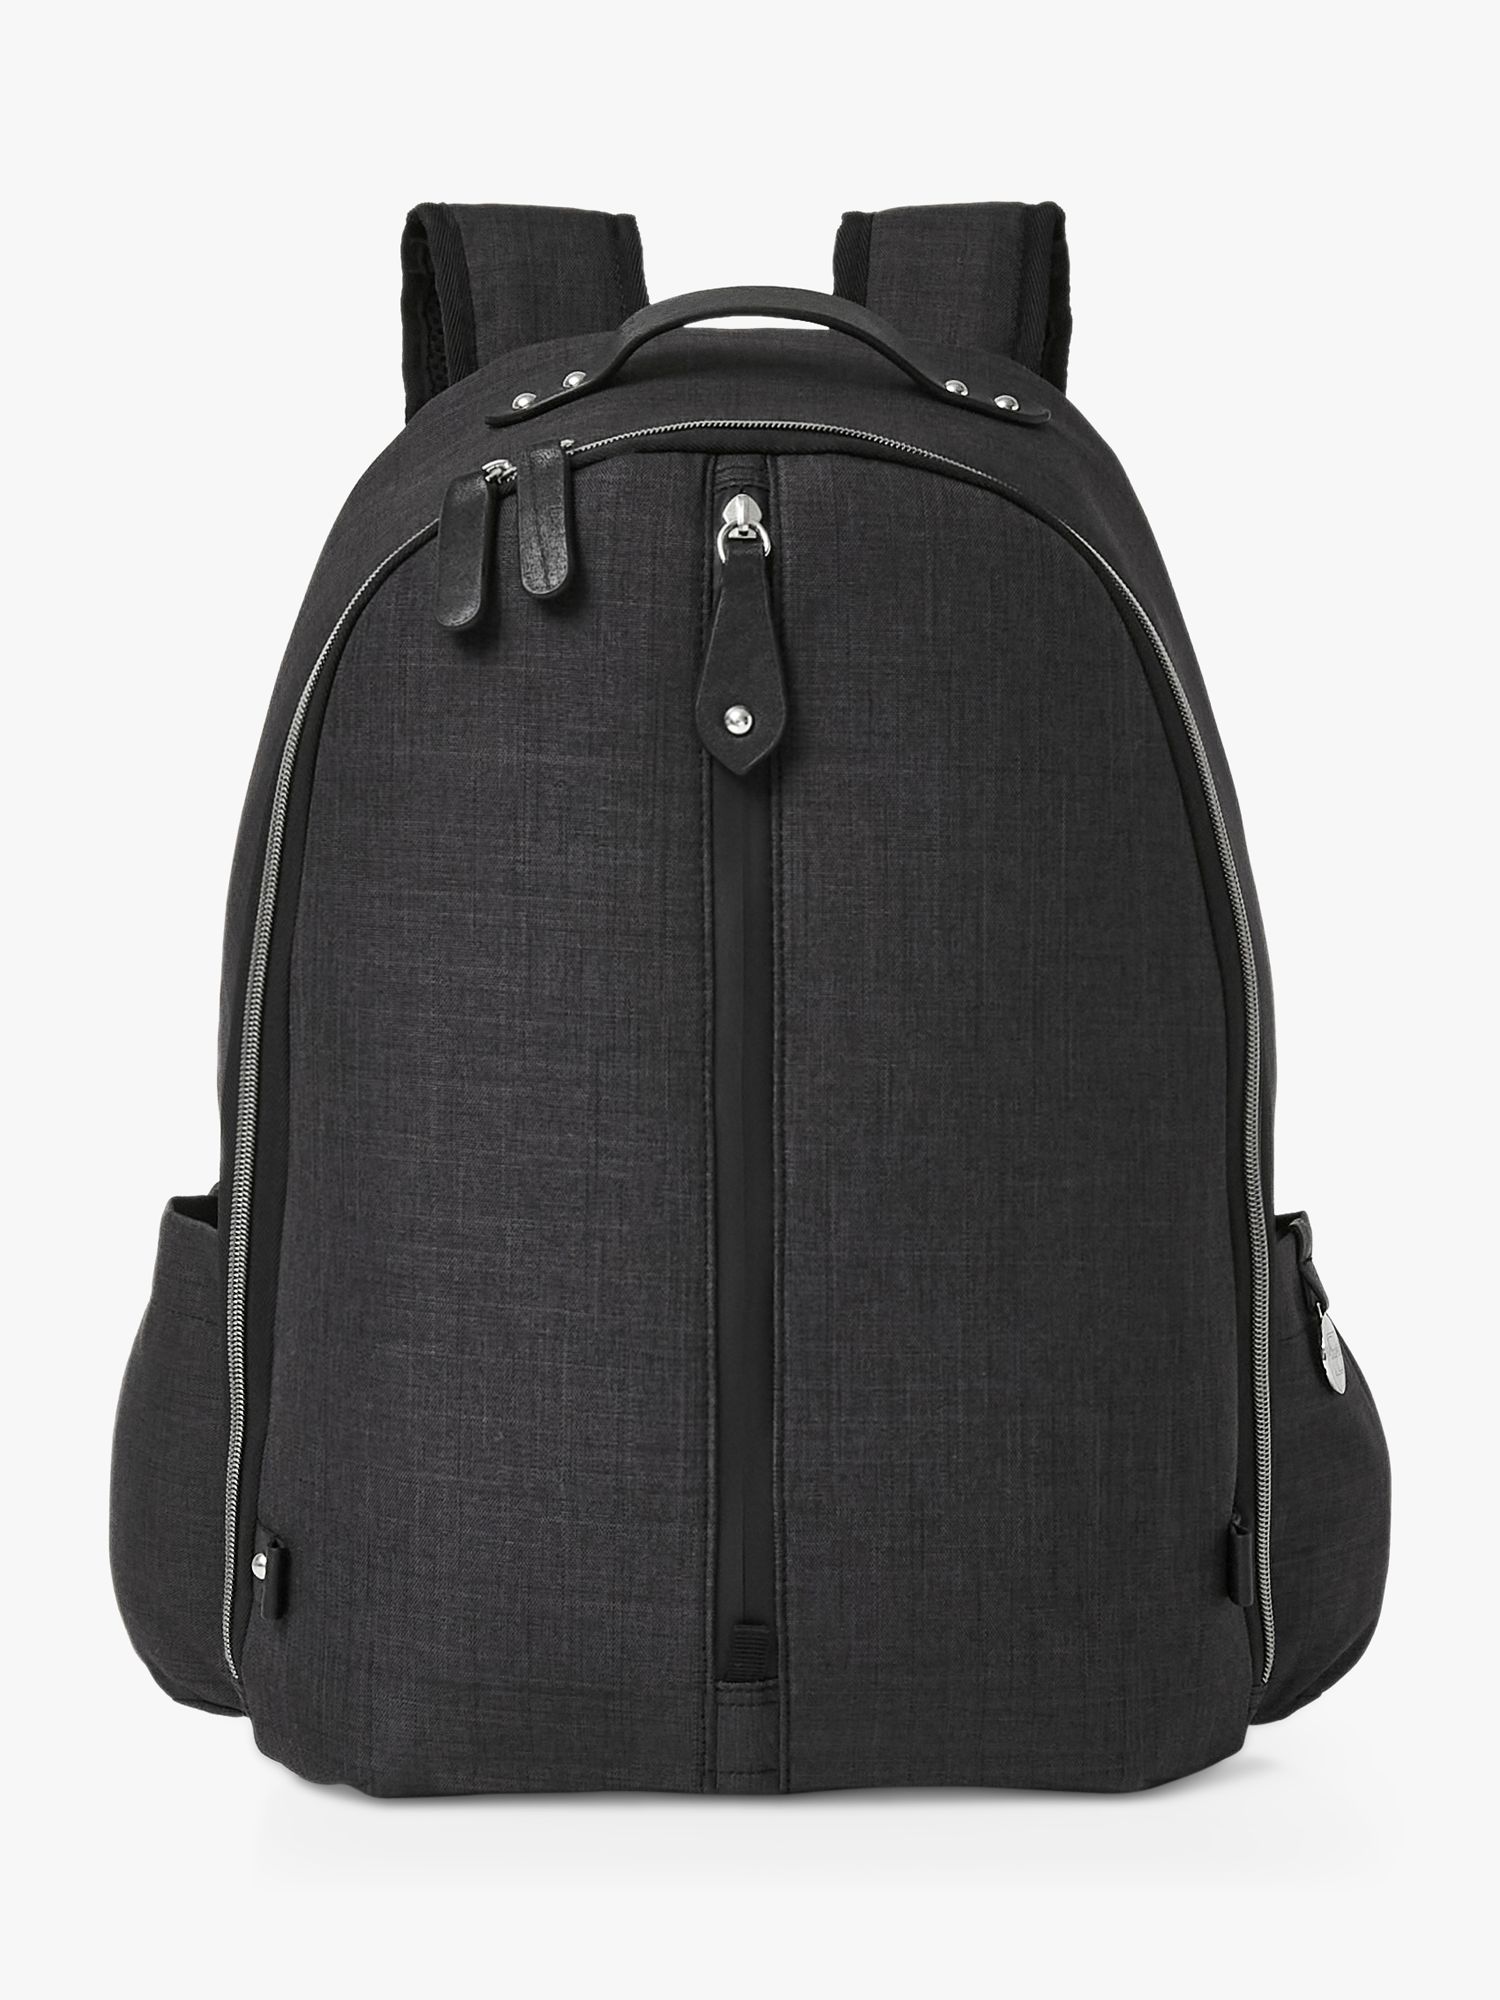 PacaPod Firenze Pack Oak Designer Baby Changing Bag convertible backpack straps